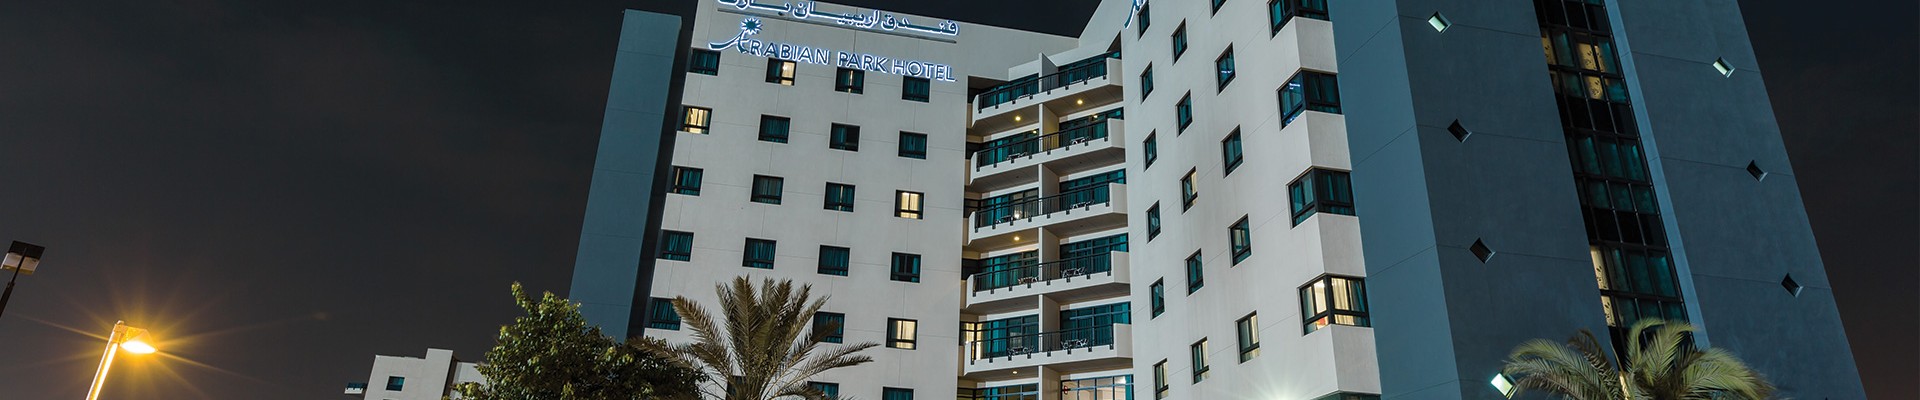 3* Arabian Park Hotel - Dubai 3 Night package